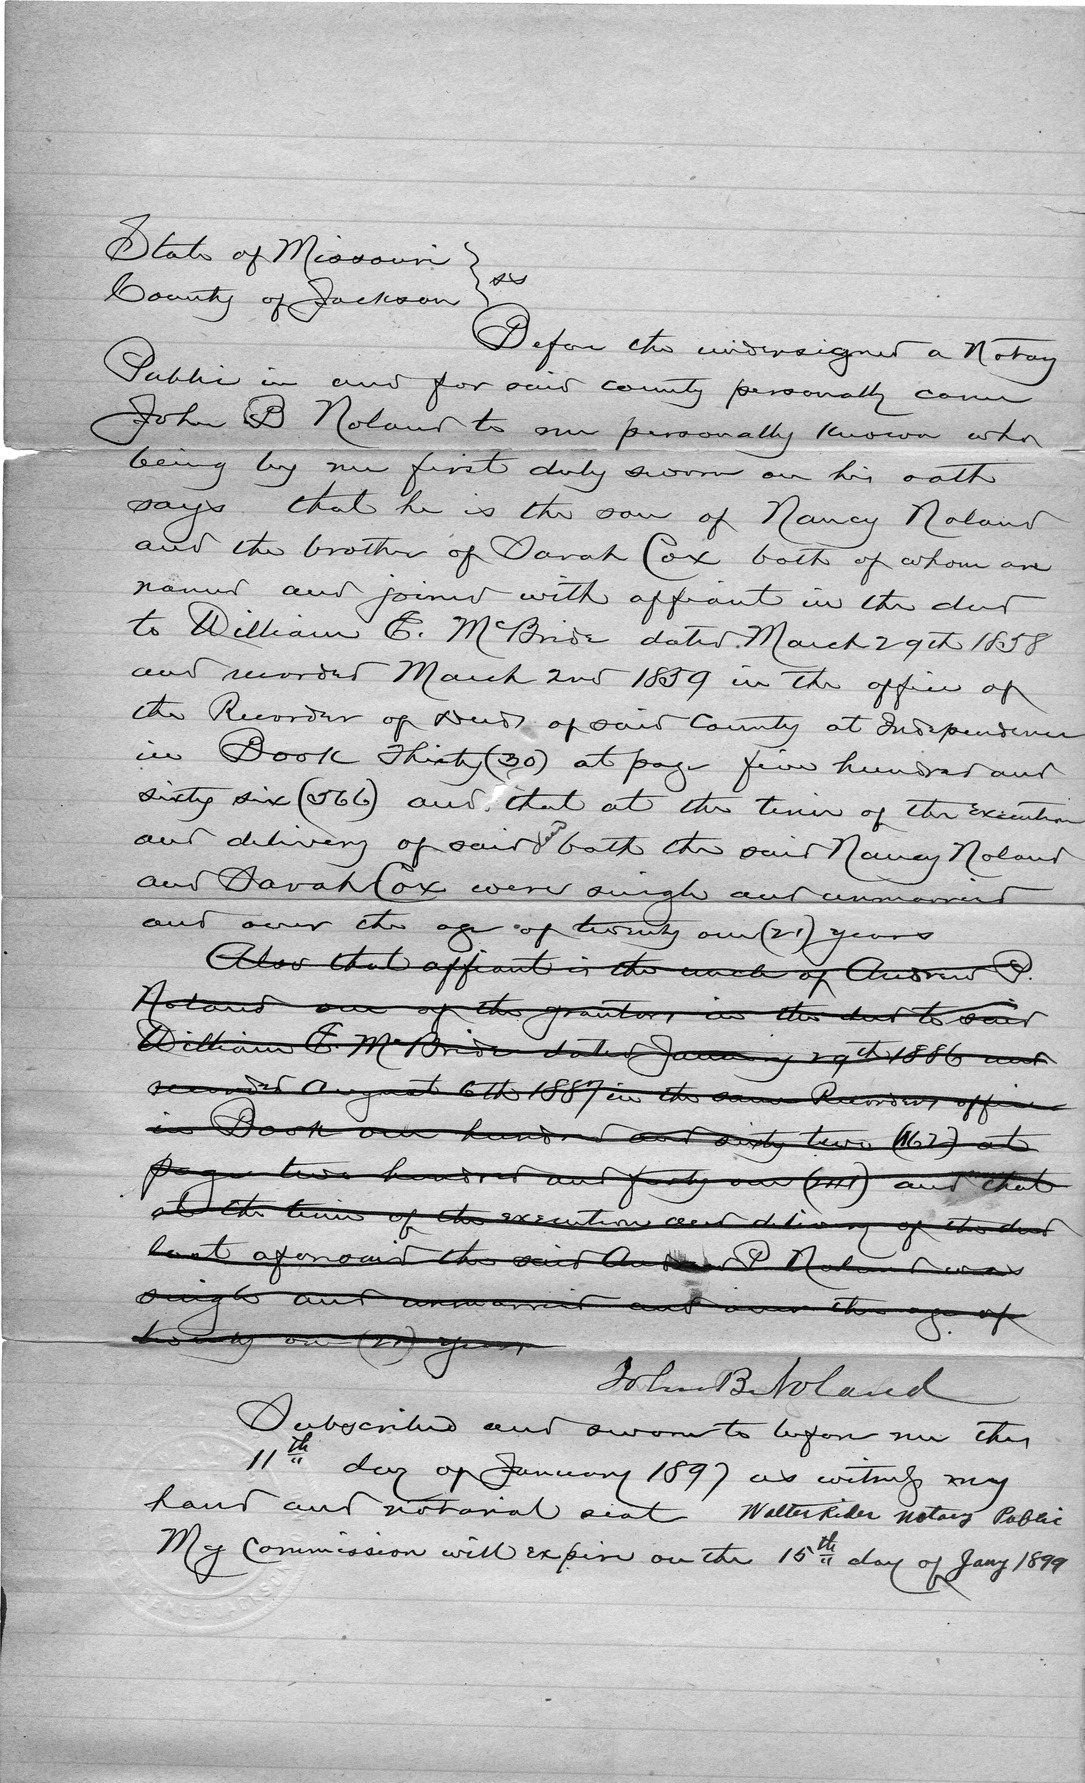 Affidavit of John B. Noland